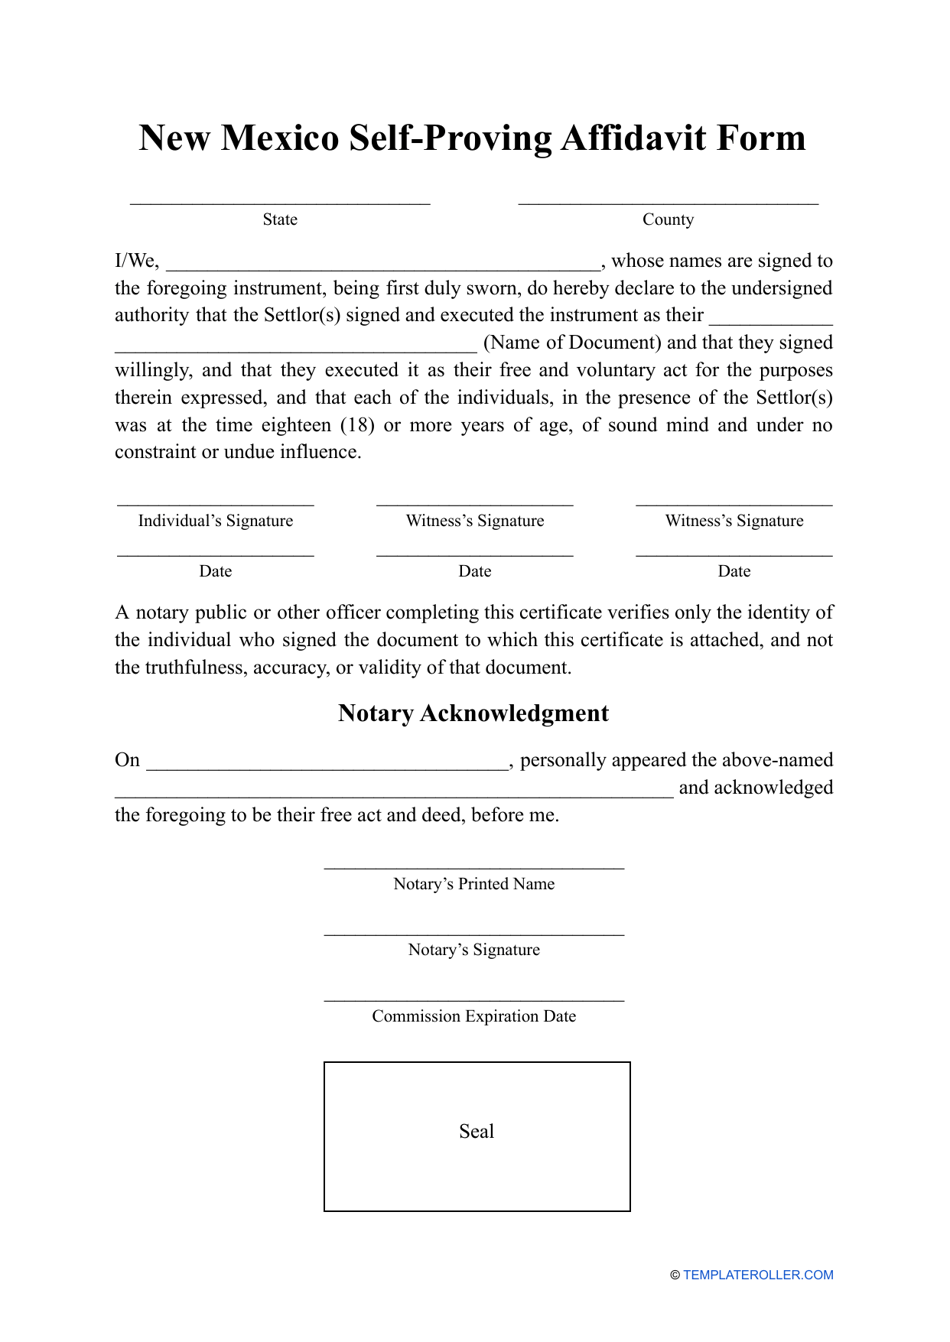 Self-proving Affidavit Form - New Mexico, Page 1